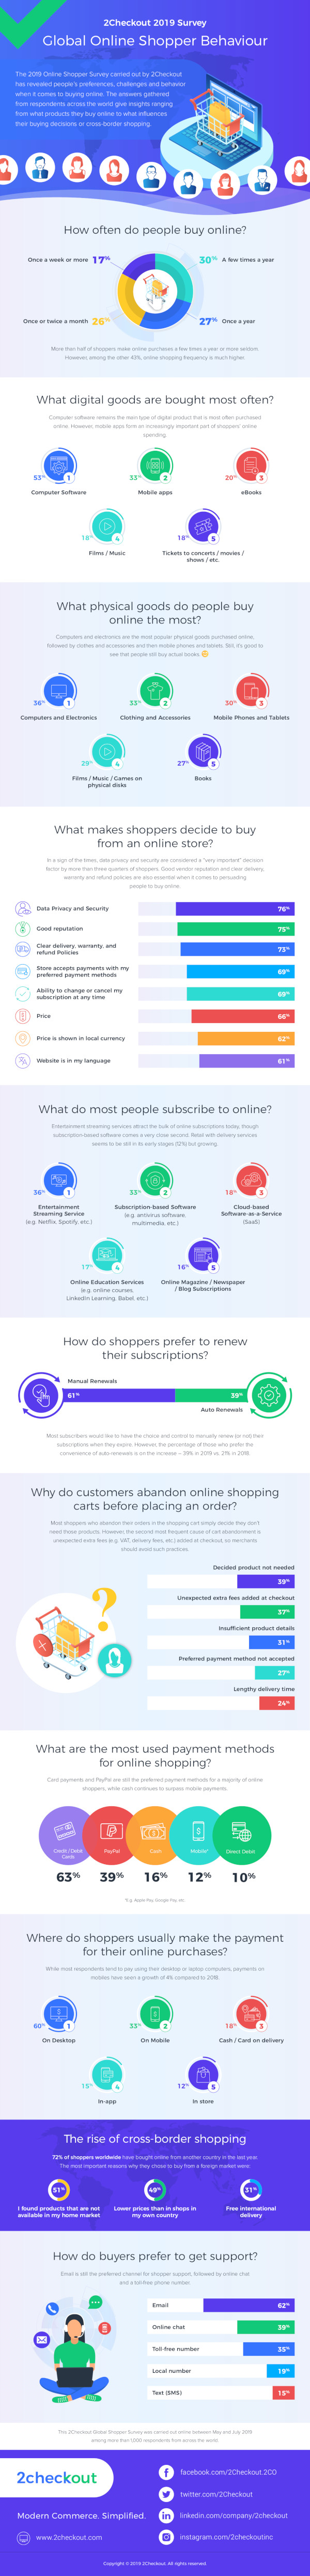 2Checkout shopper survey infographic 2019